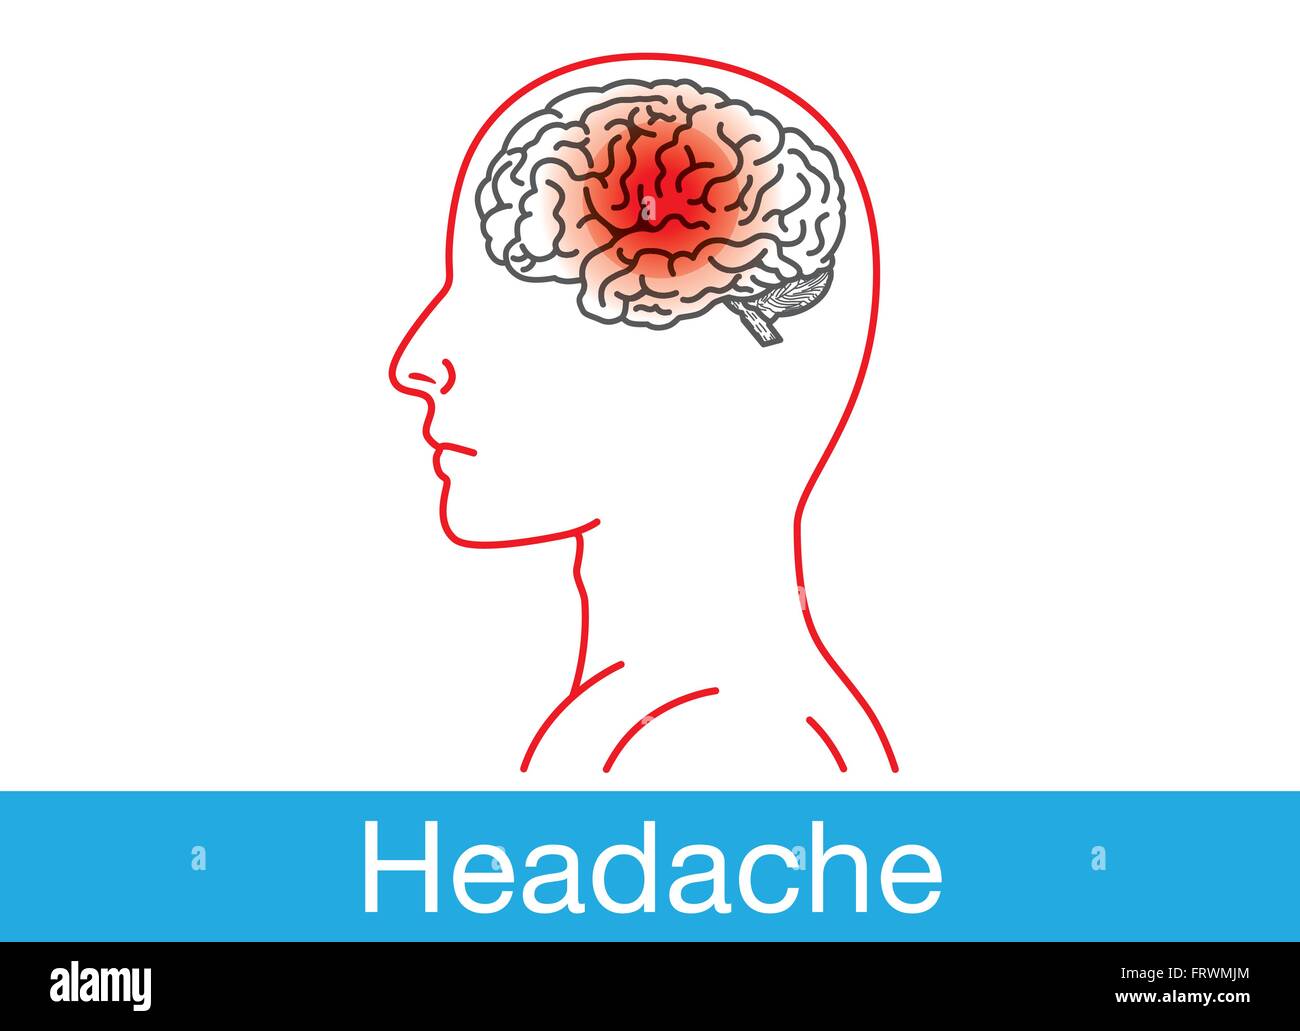 Headache signal. Stock Vector